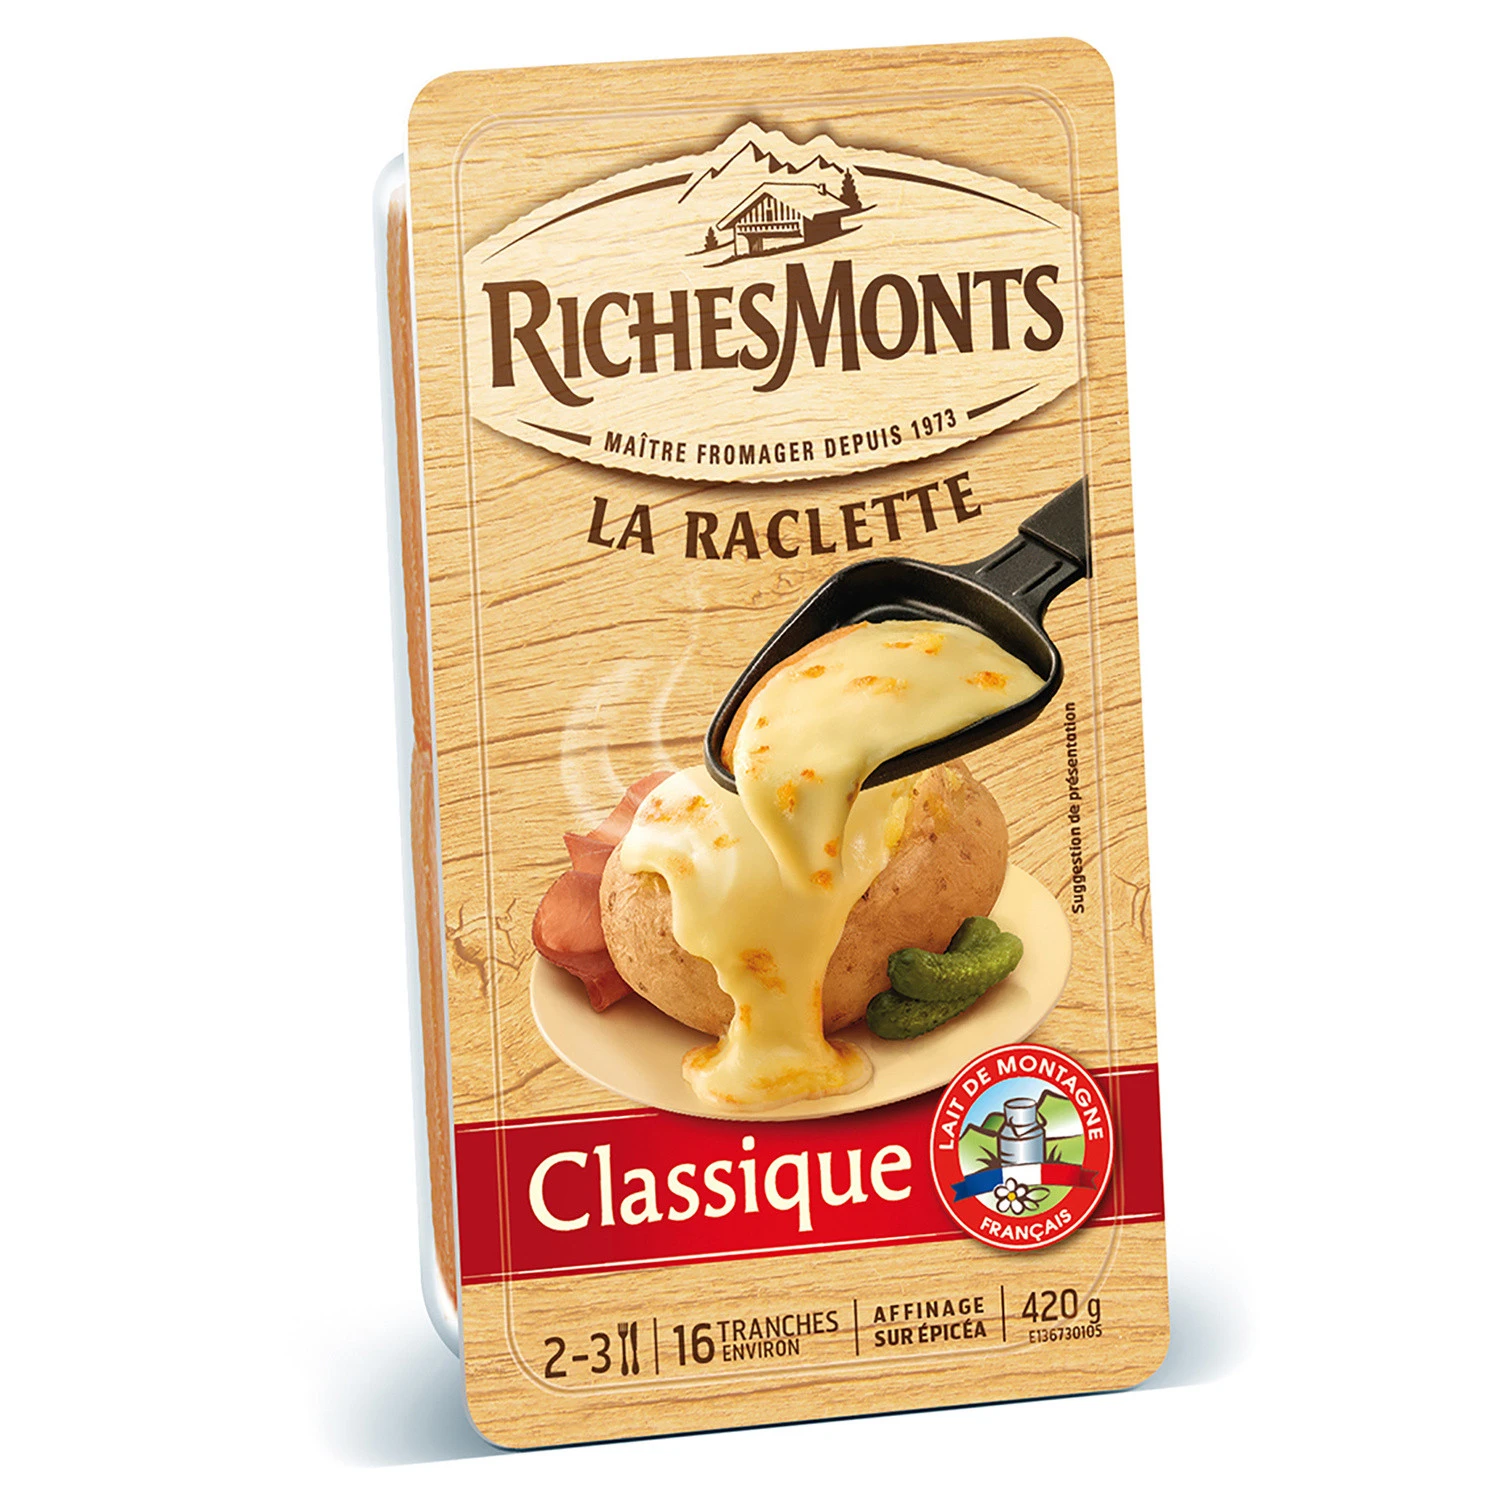 RichesMonts Plain Raclette cheese 420g